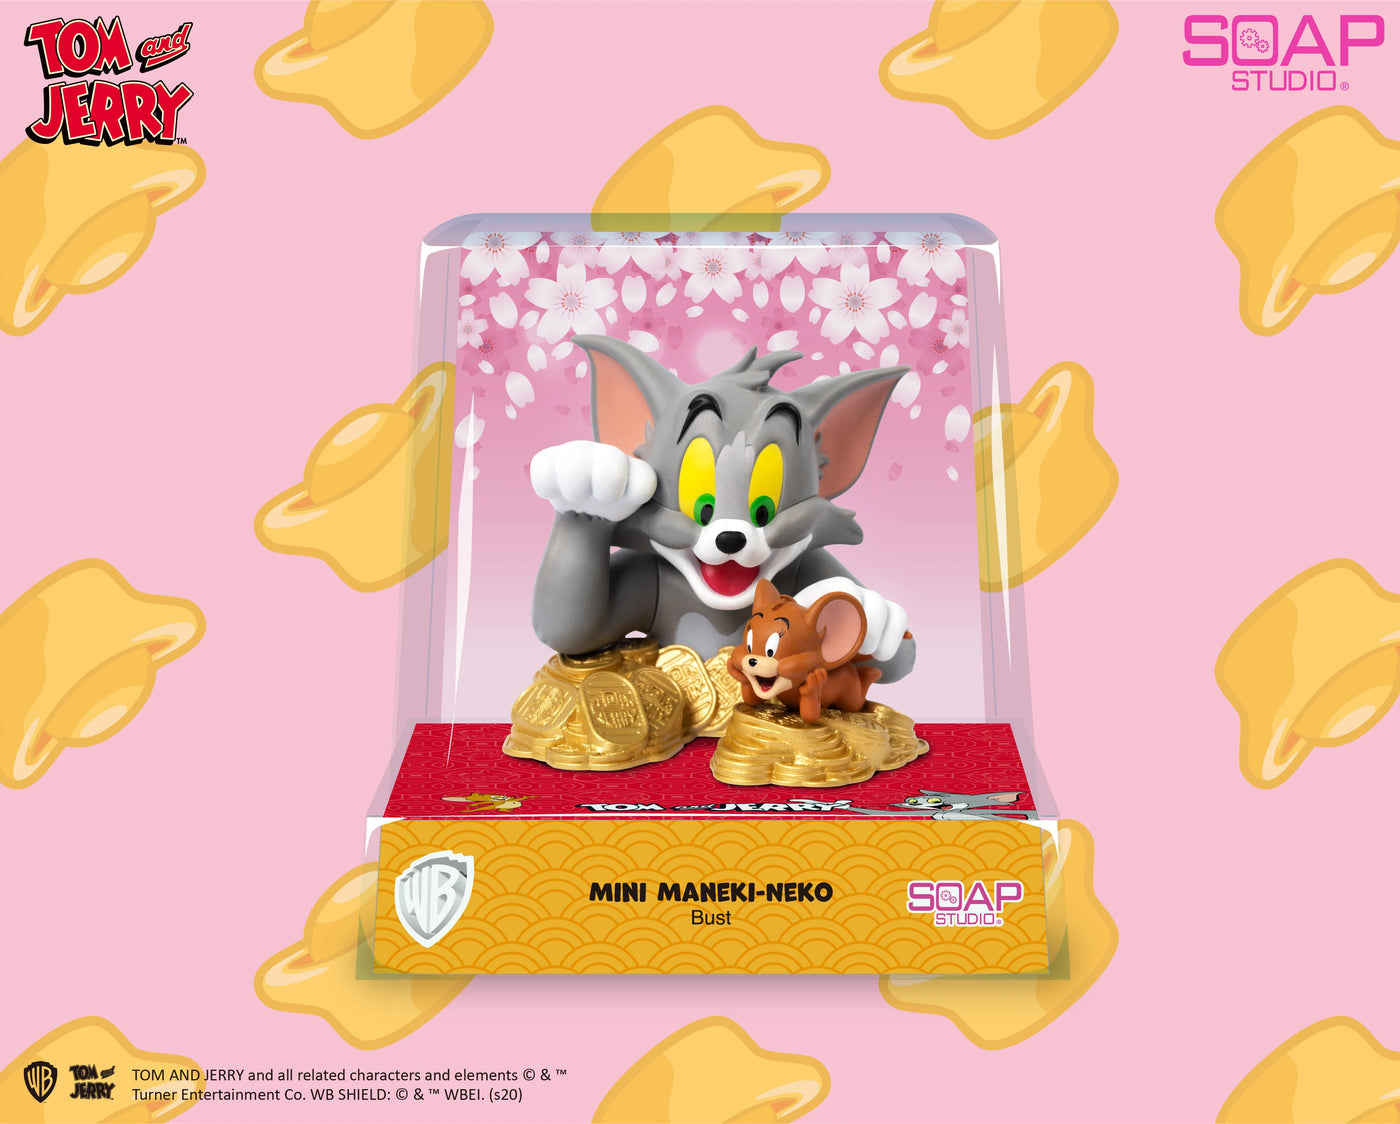 Beast Kingdom: Soap Studio - Tom and Jerry - Mini Maneki-Neko Bust –  Sheldonet Toy Store